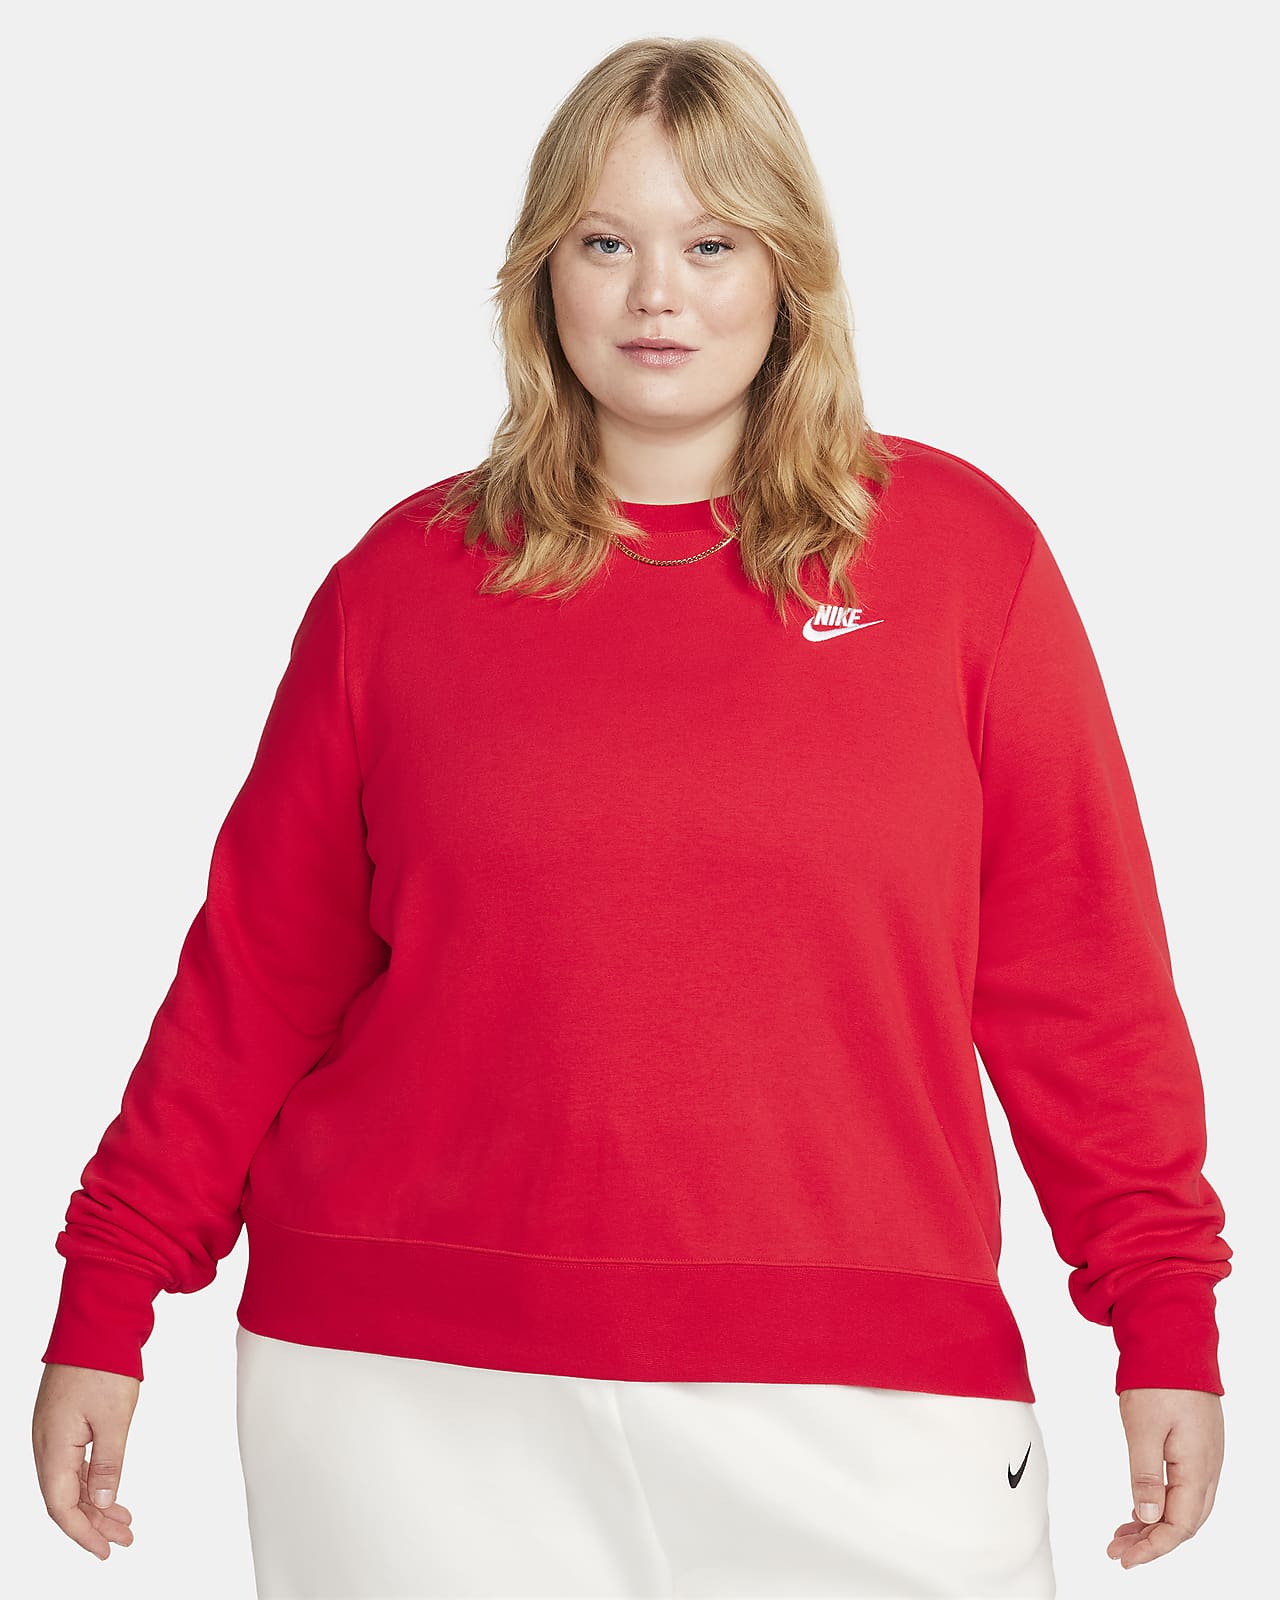  Women's Plus Size Fuzzy Sweatsuits Women 2 Piece Set